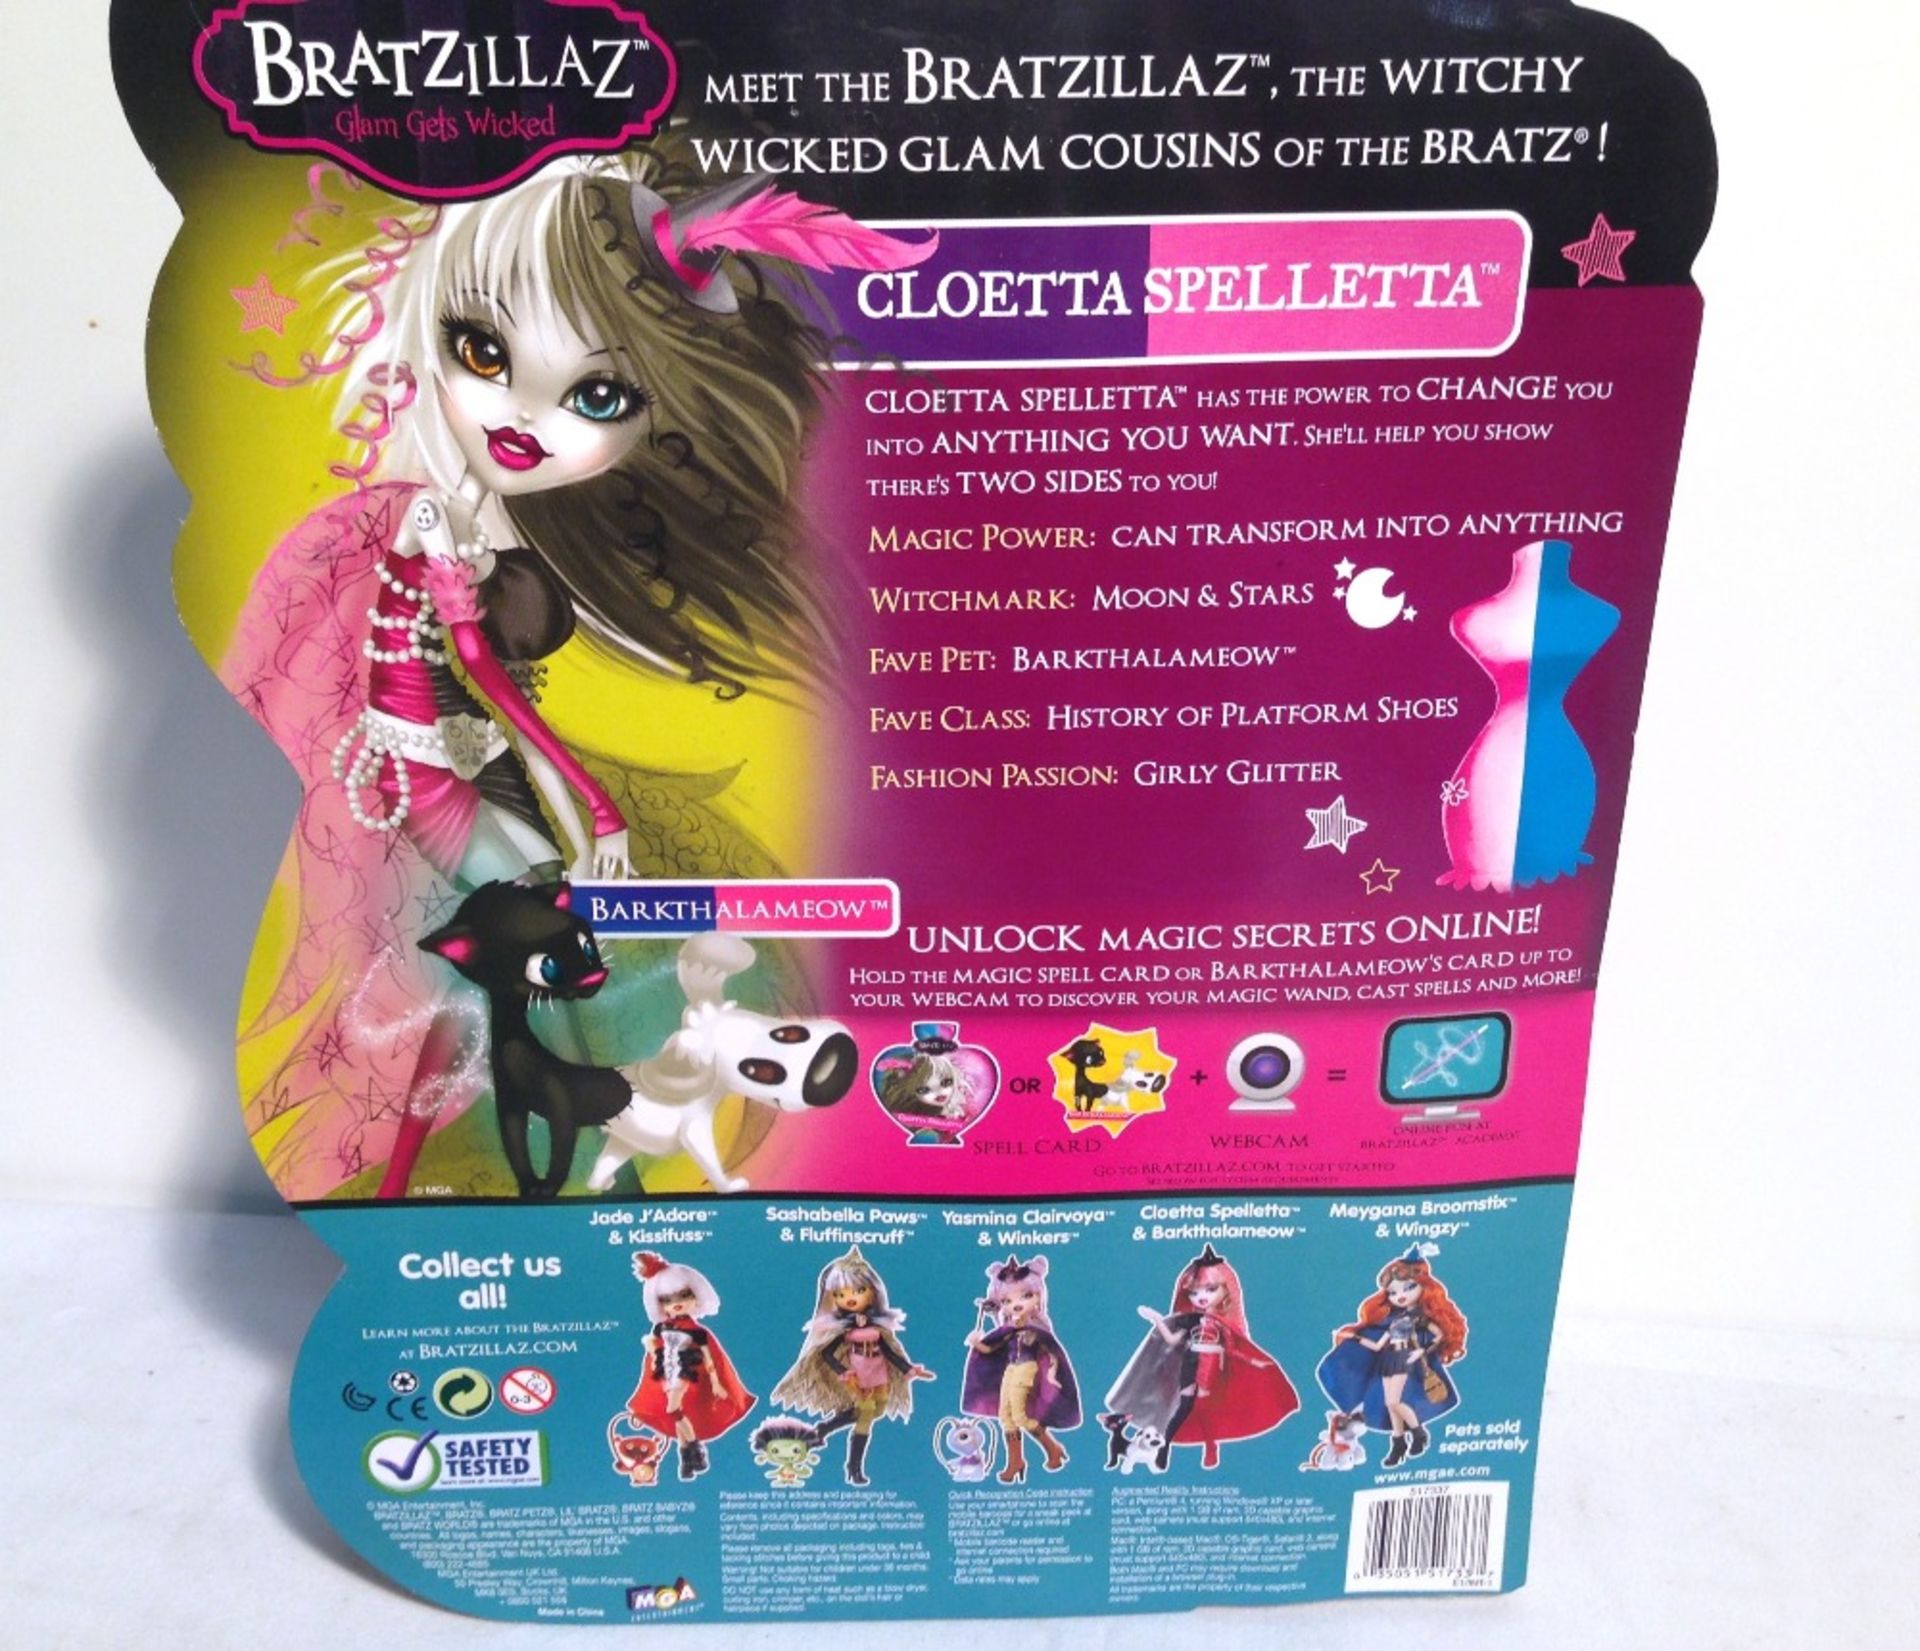 8 x Bratzillas - Cloetta Spelletta  - Glam gets wicked dolls - Image 2 of 2